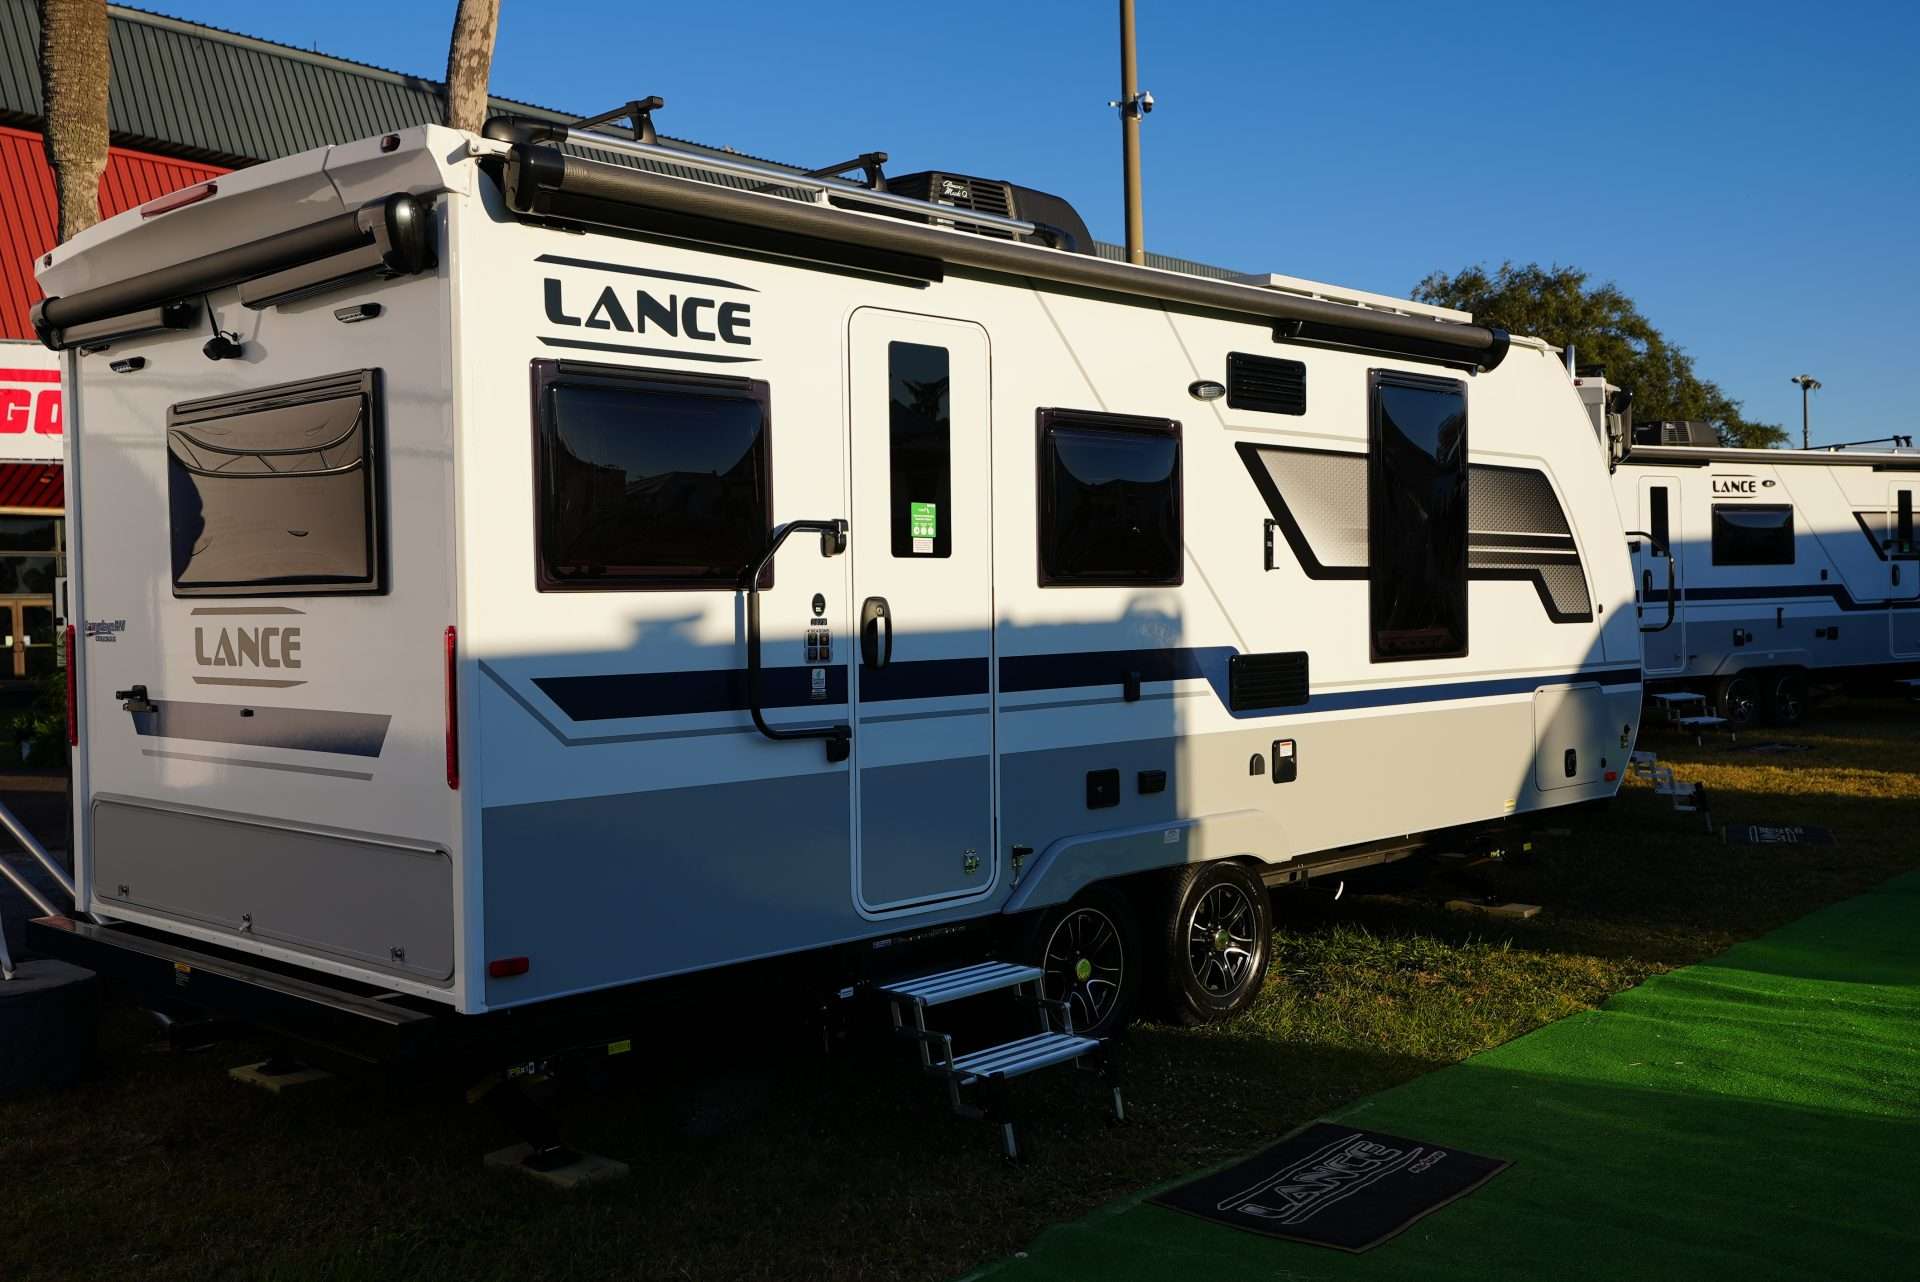 Lance travel trailer at RV dealership